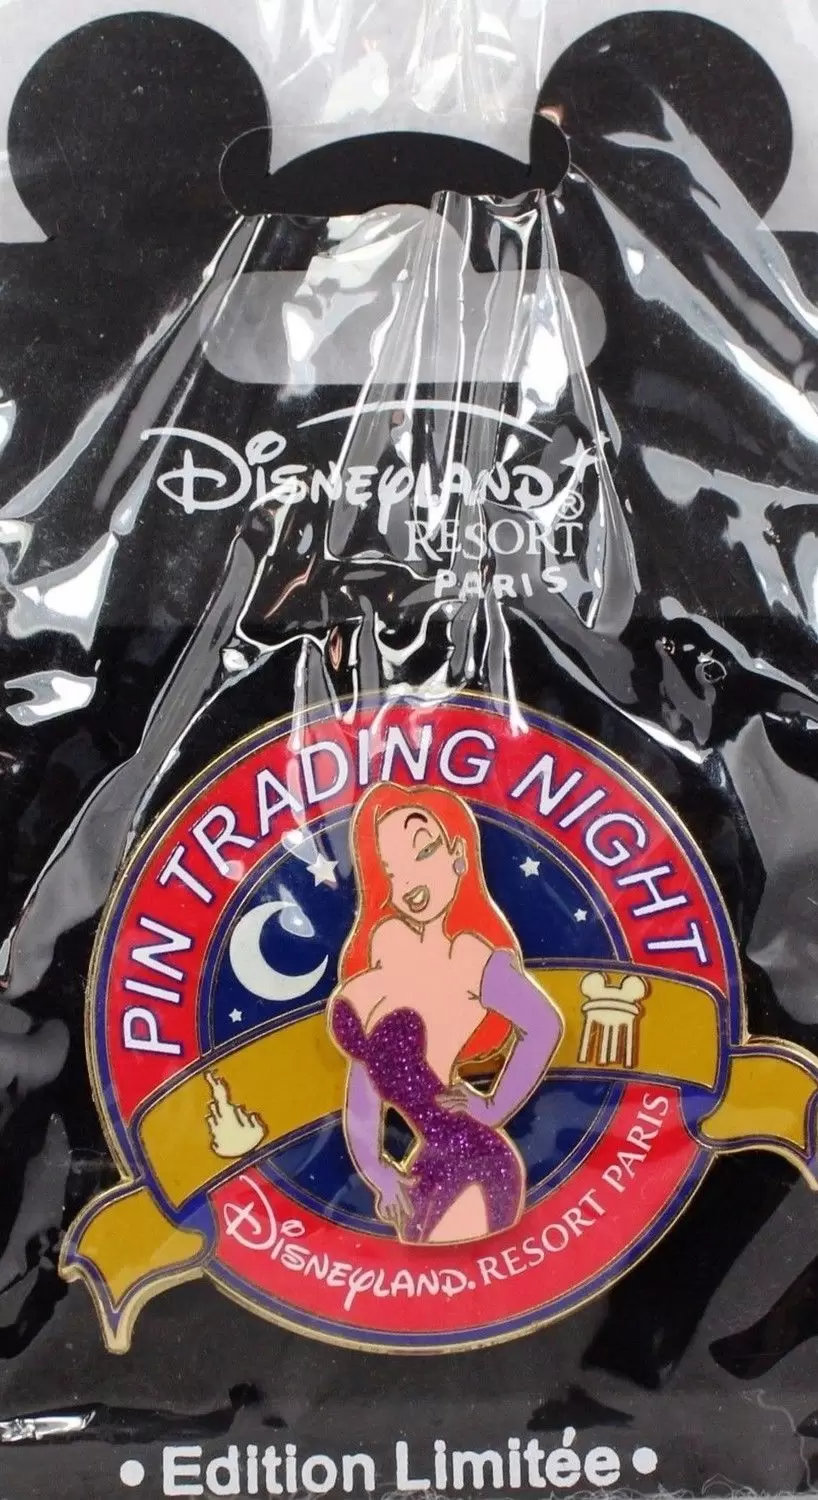 Disney - Pin Trading Night - Jessica Rabbit